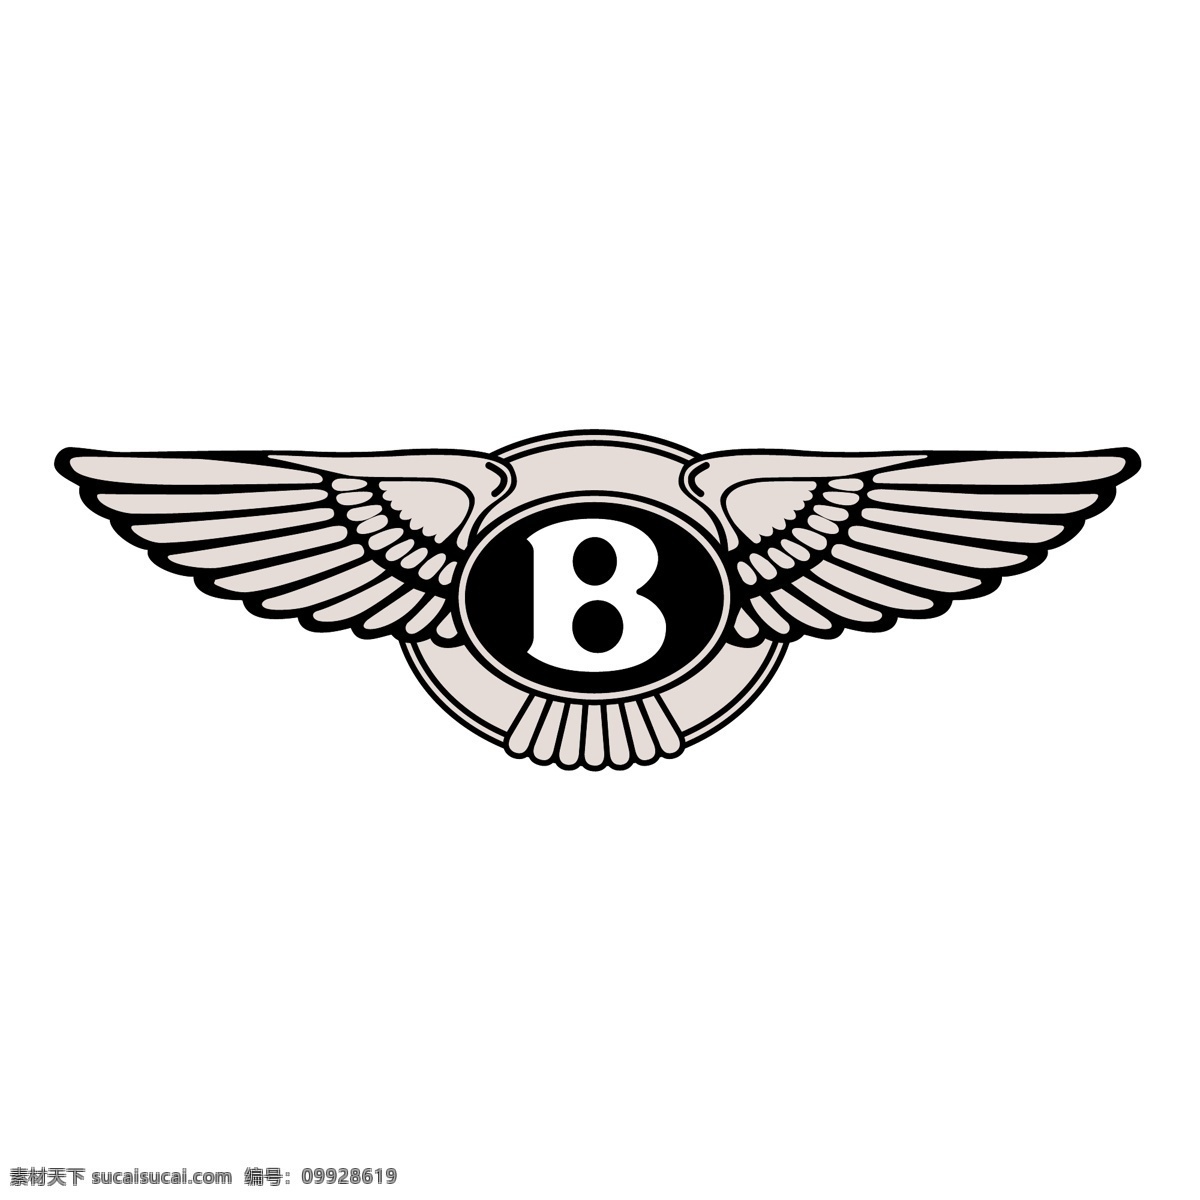 bentley 宾利 标志 汽车logo 宾利汽车 矢量图 其他矢量图